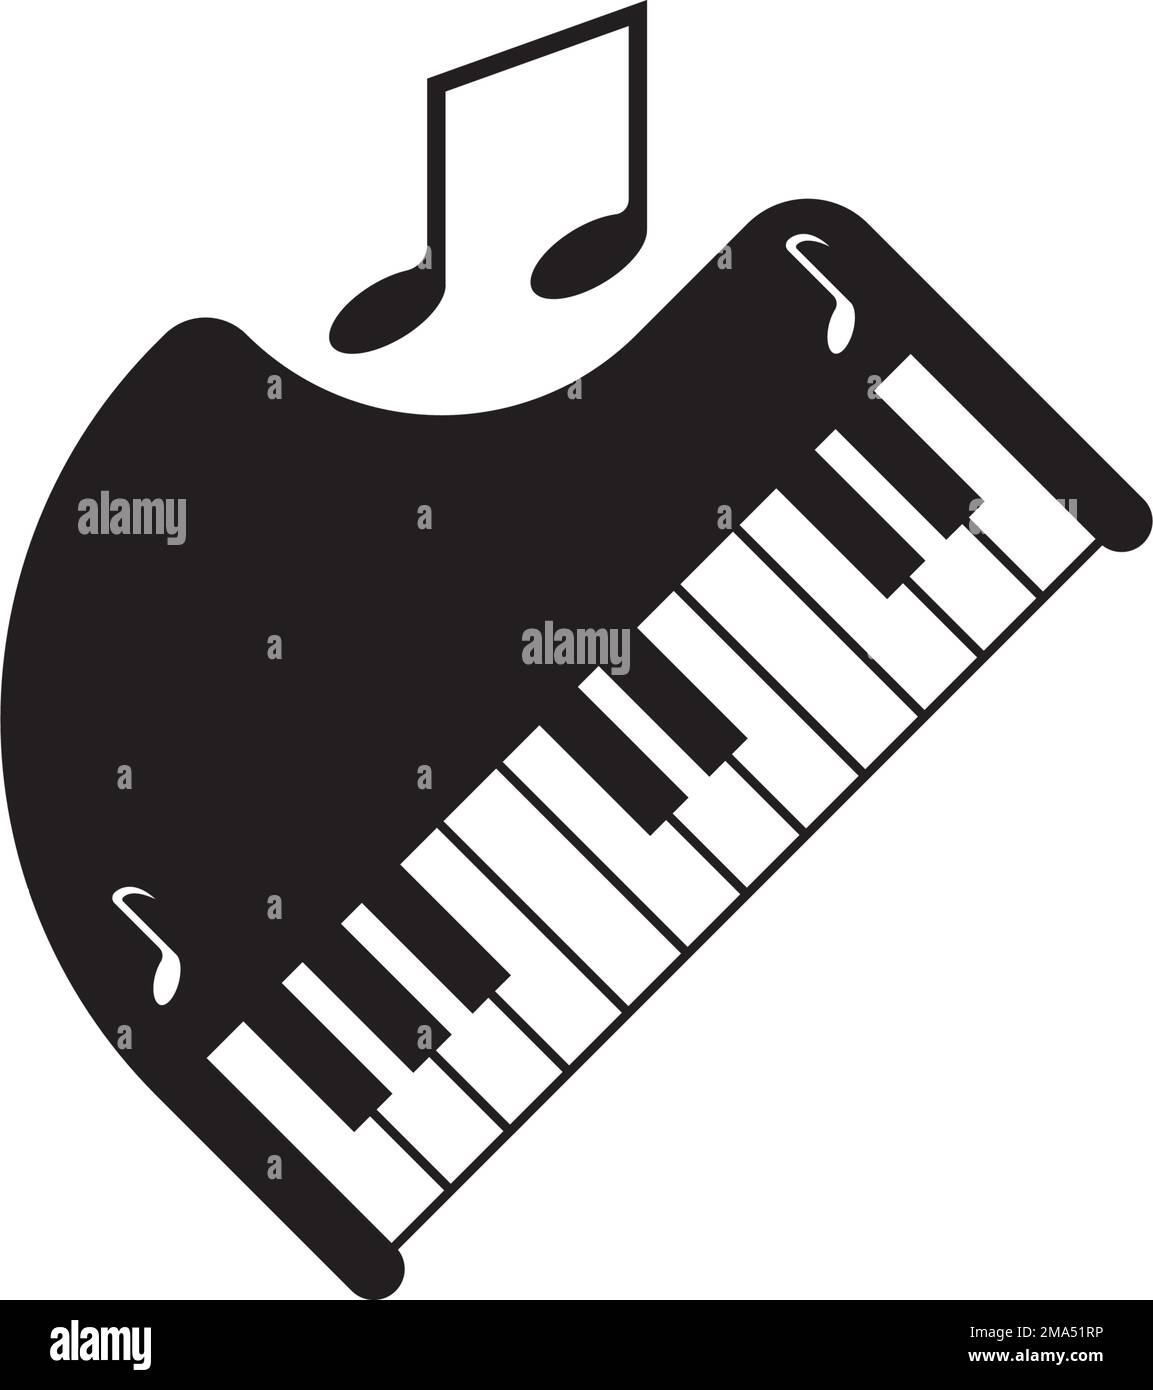 Logo-Vorlage für Klaviervektorsymbole Stock Vektor